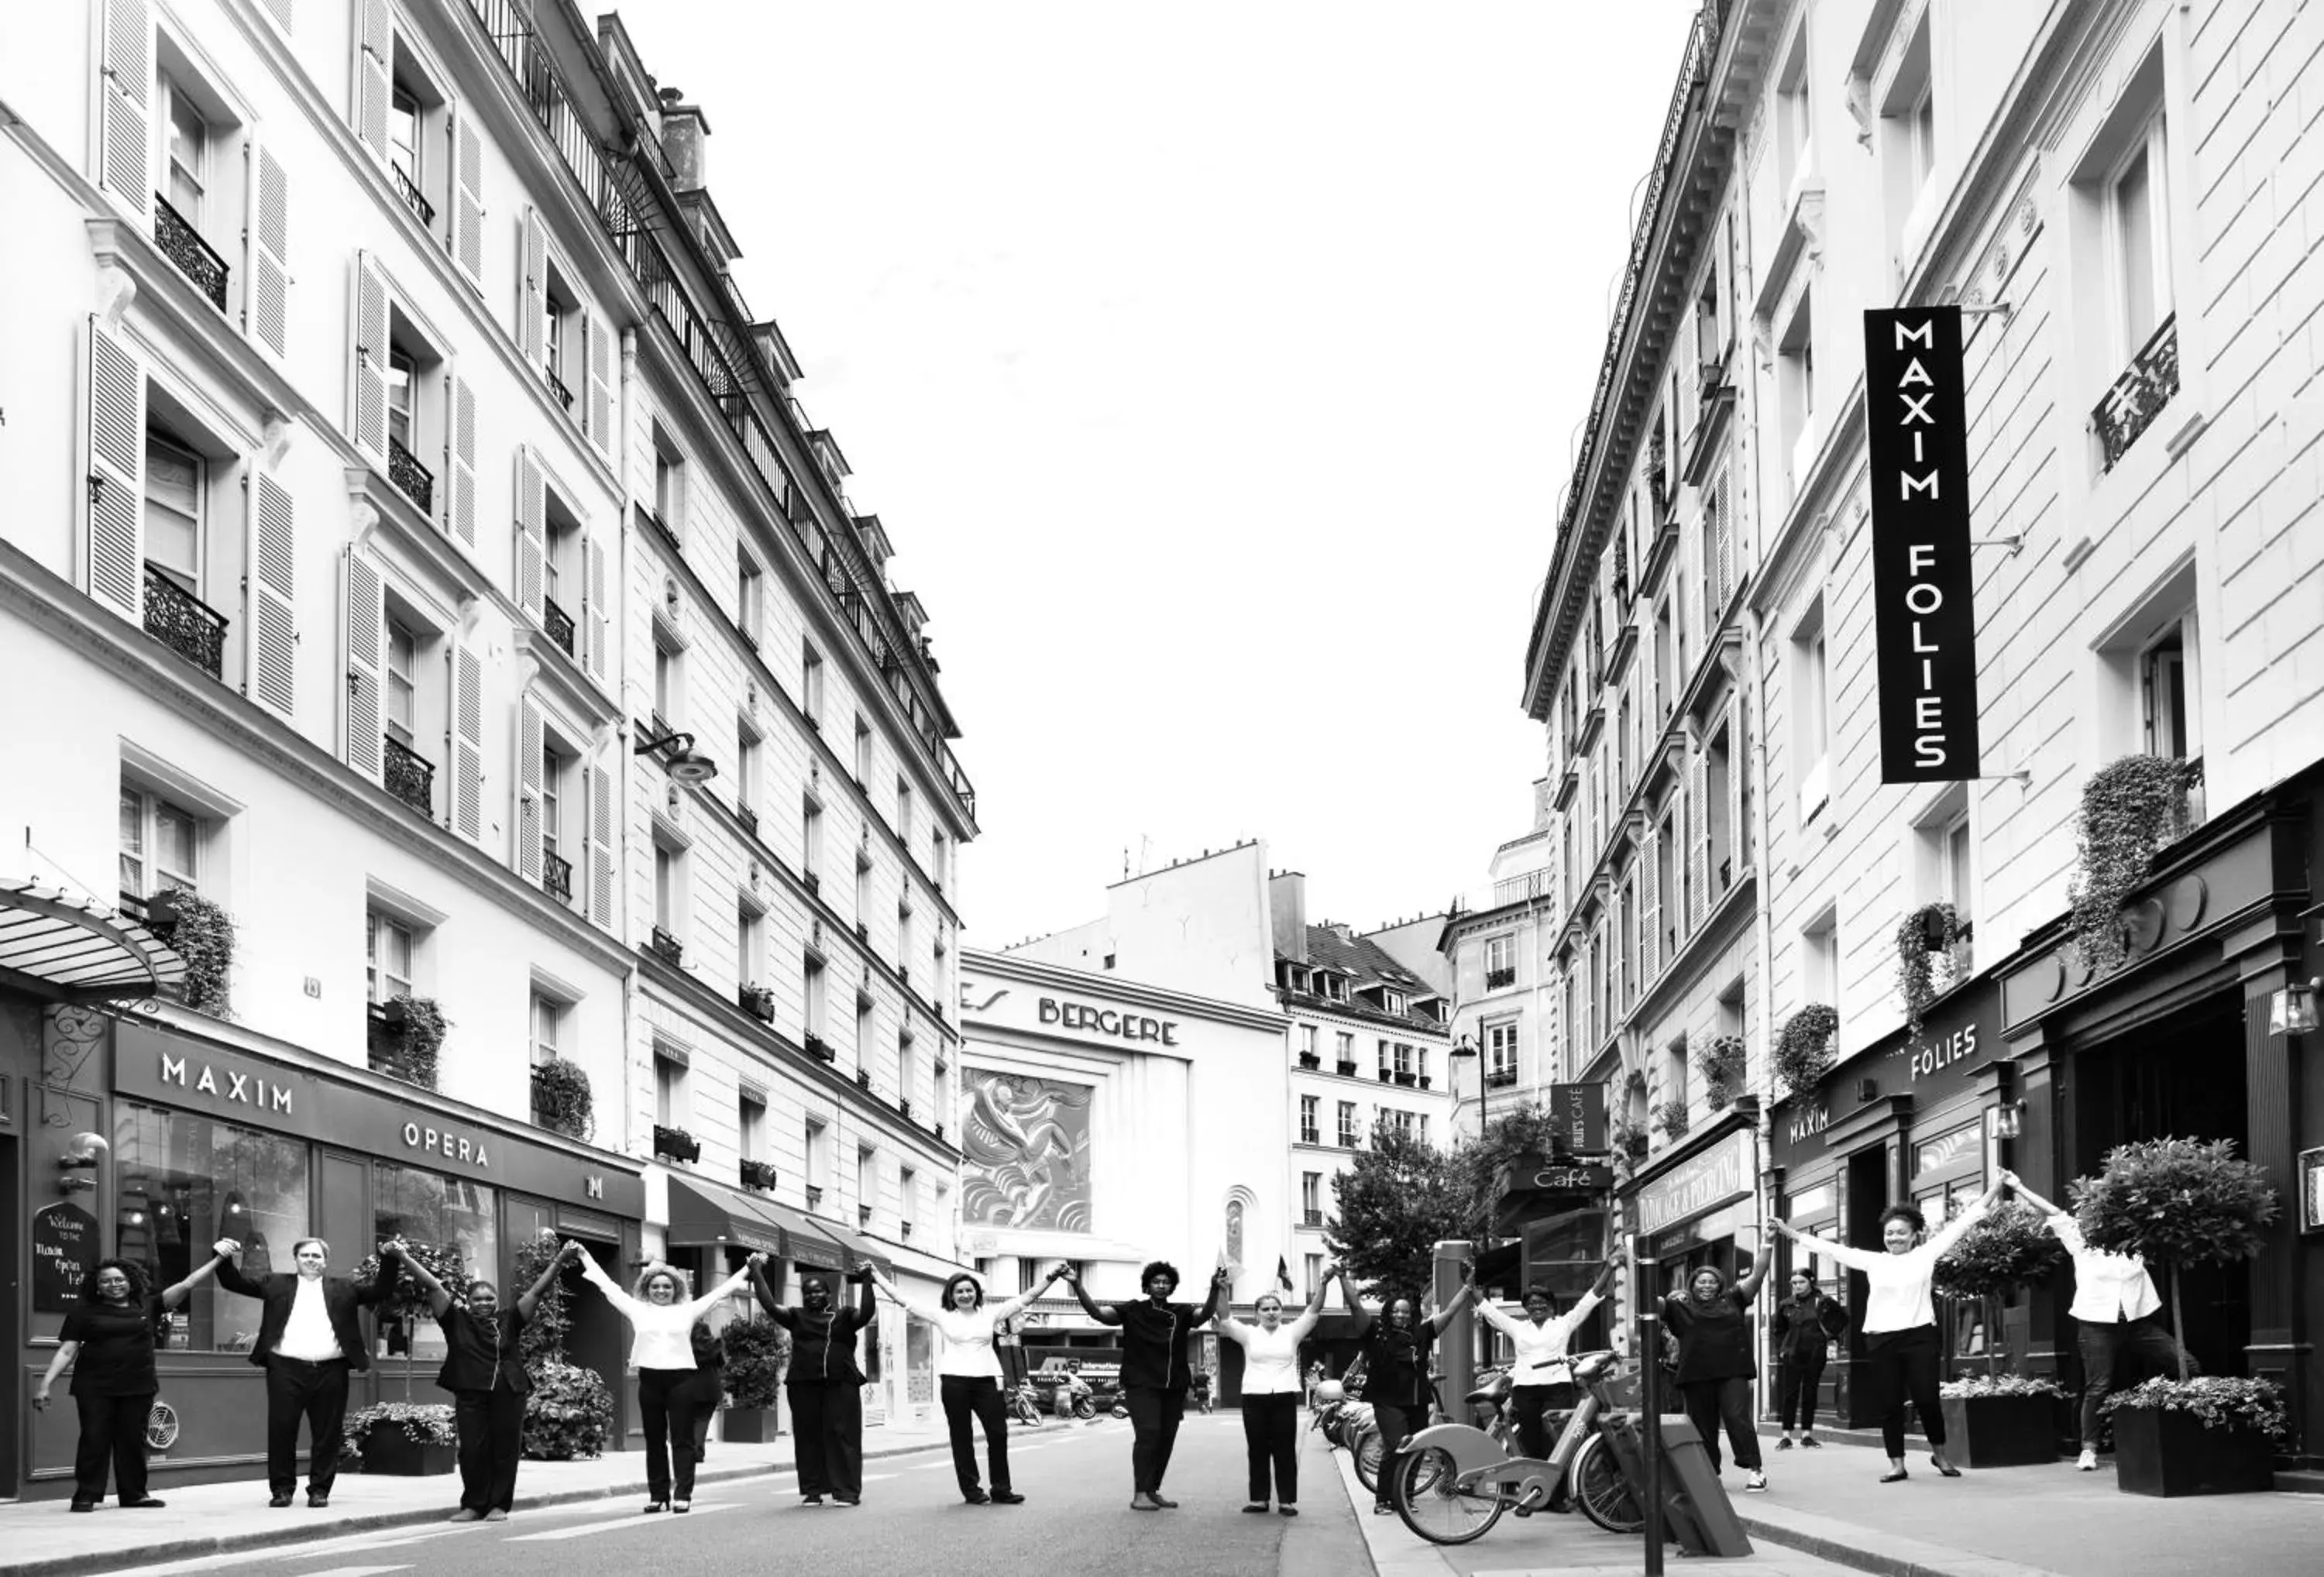 Staff, Neighborhood in Hôtel Maxim Opéra